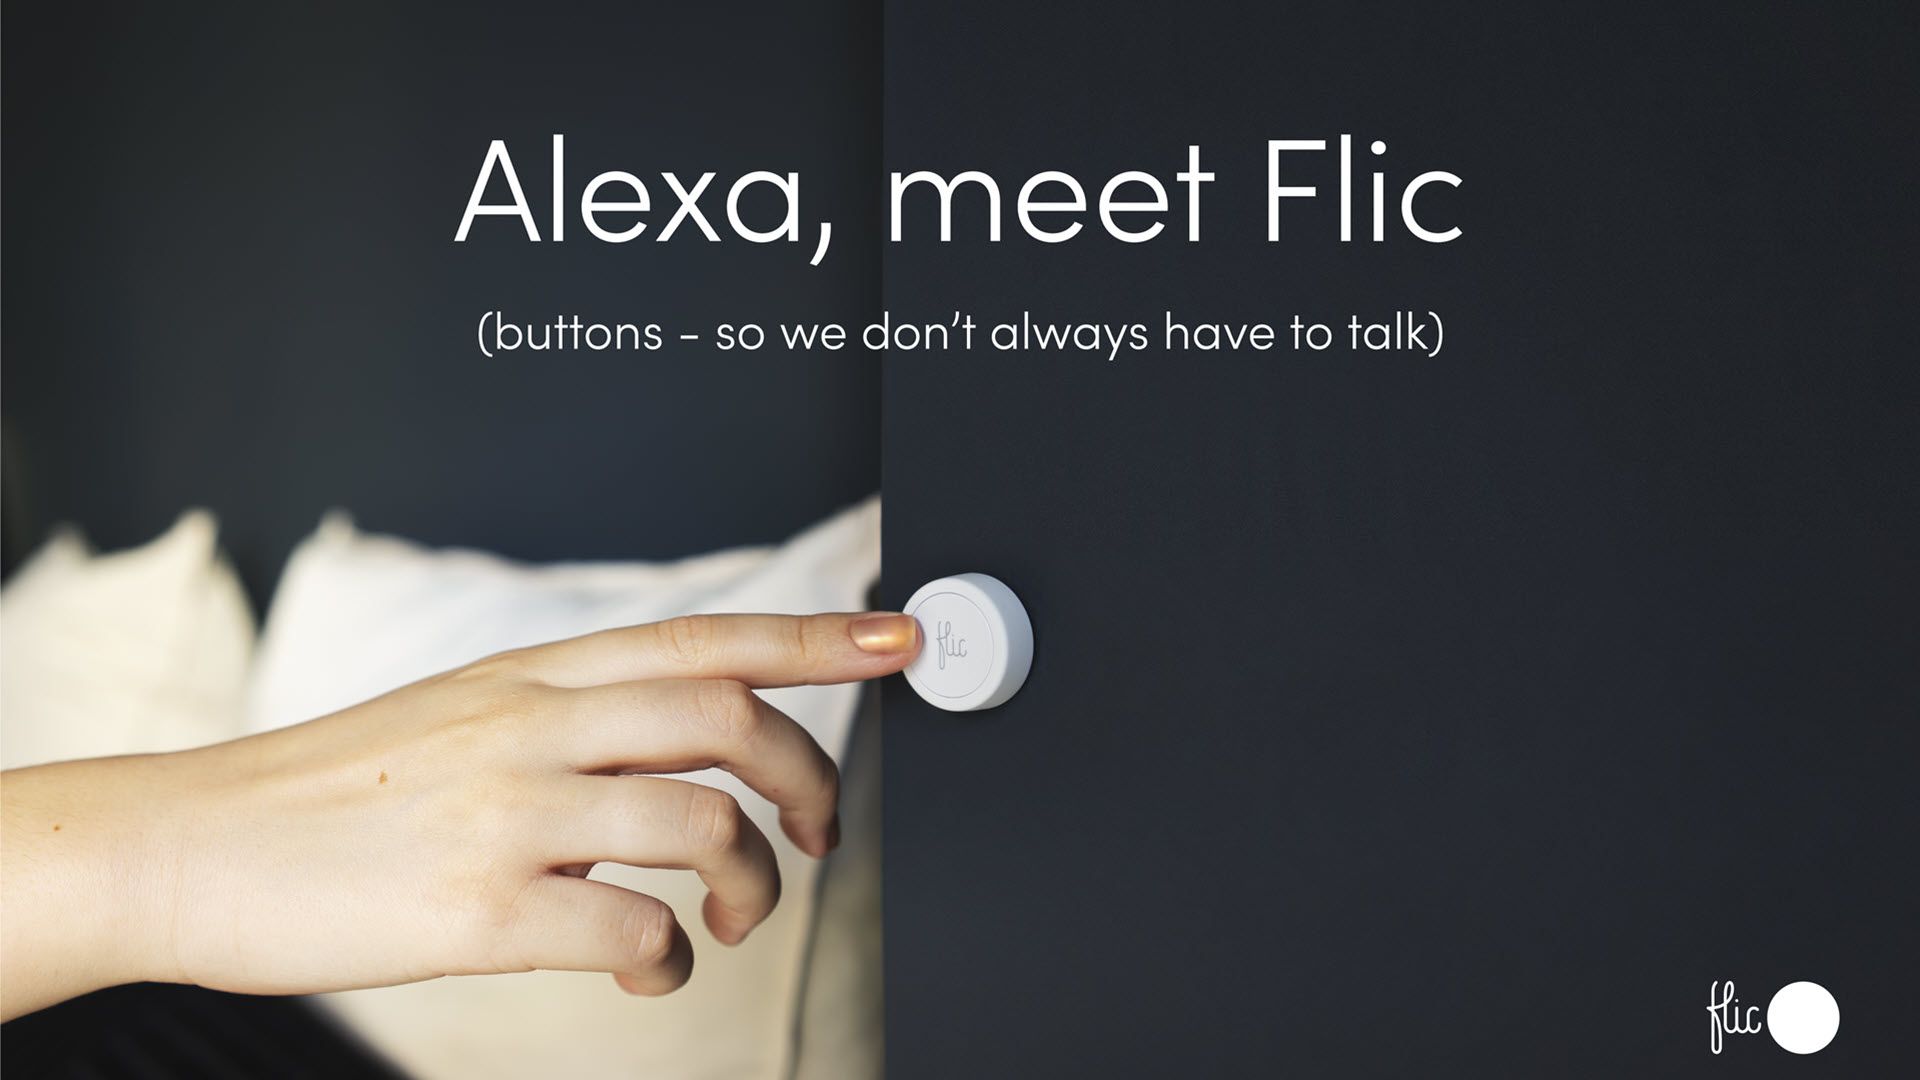 Flic 2 Smart button - Trigger Alexa & Apple HomeKit - Starter kit 3 x Flic  2 buttons + 1 x Flic Hub LR - Smart Home Control - Works with Hue, LIFX